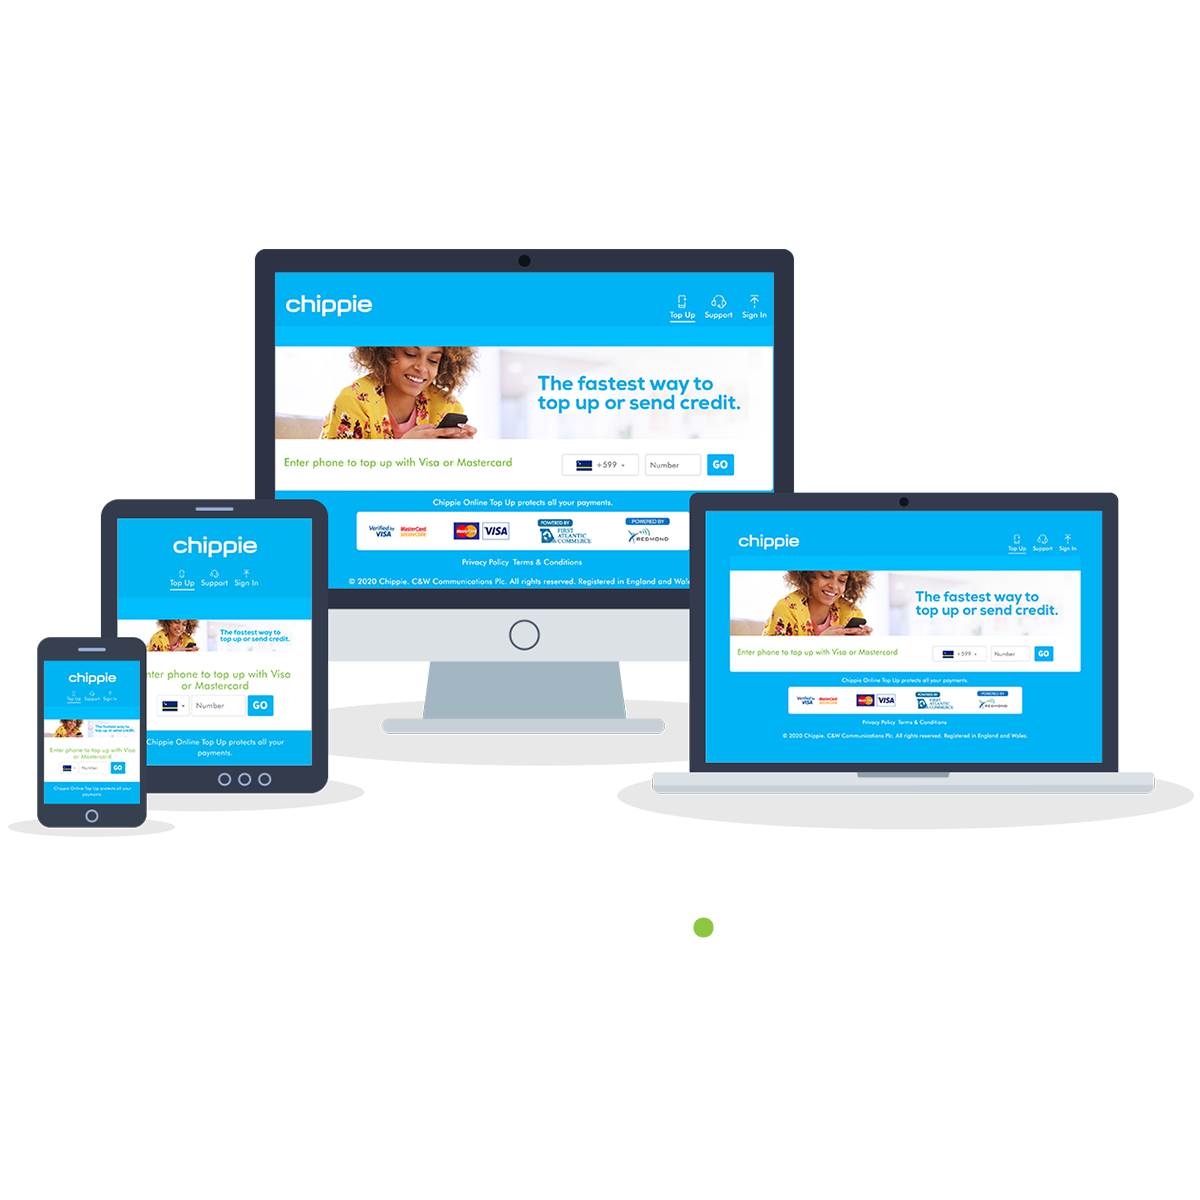 Topupchippie.com